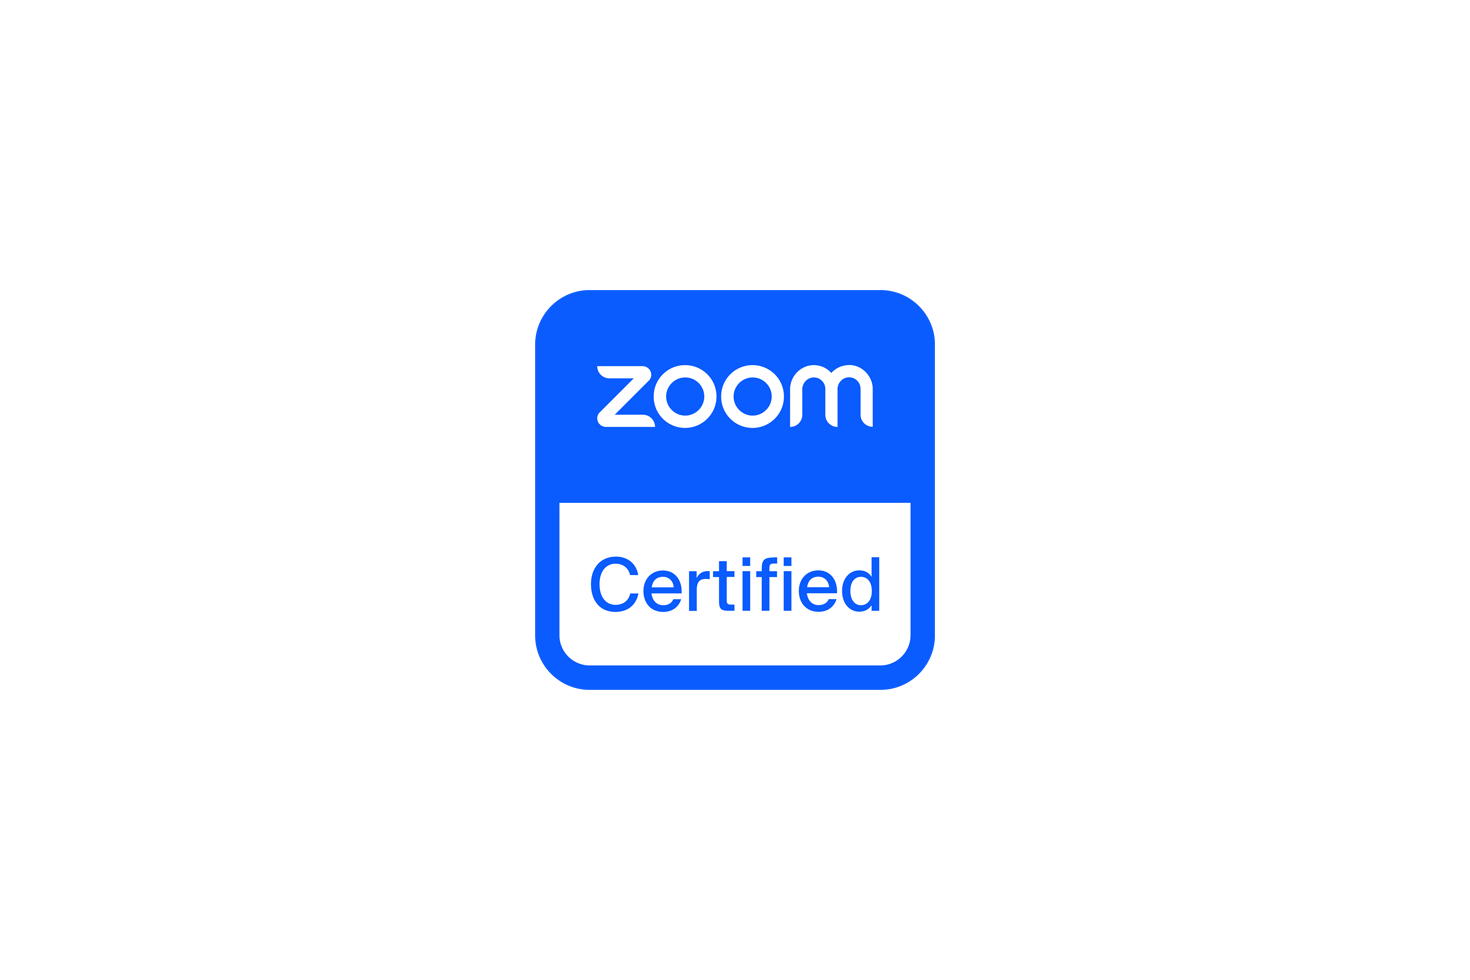 Zoom certified